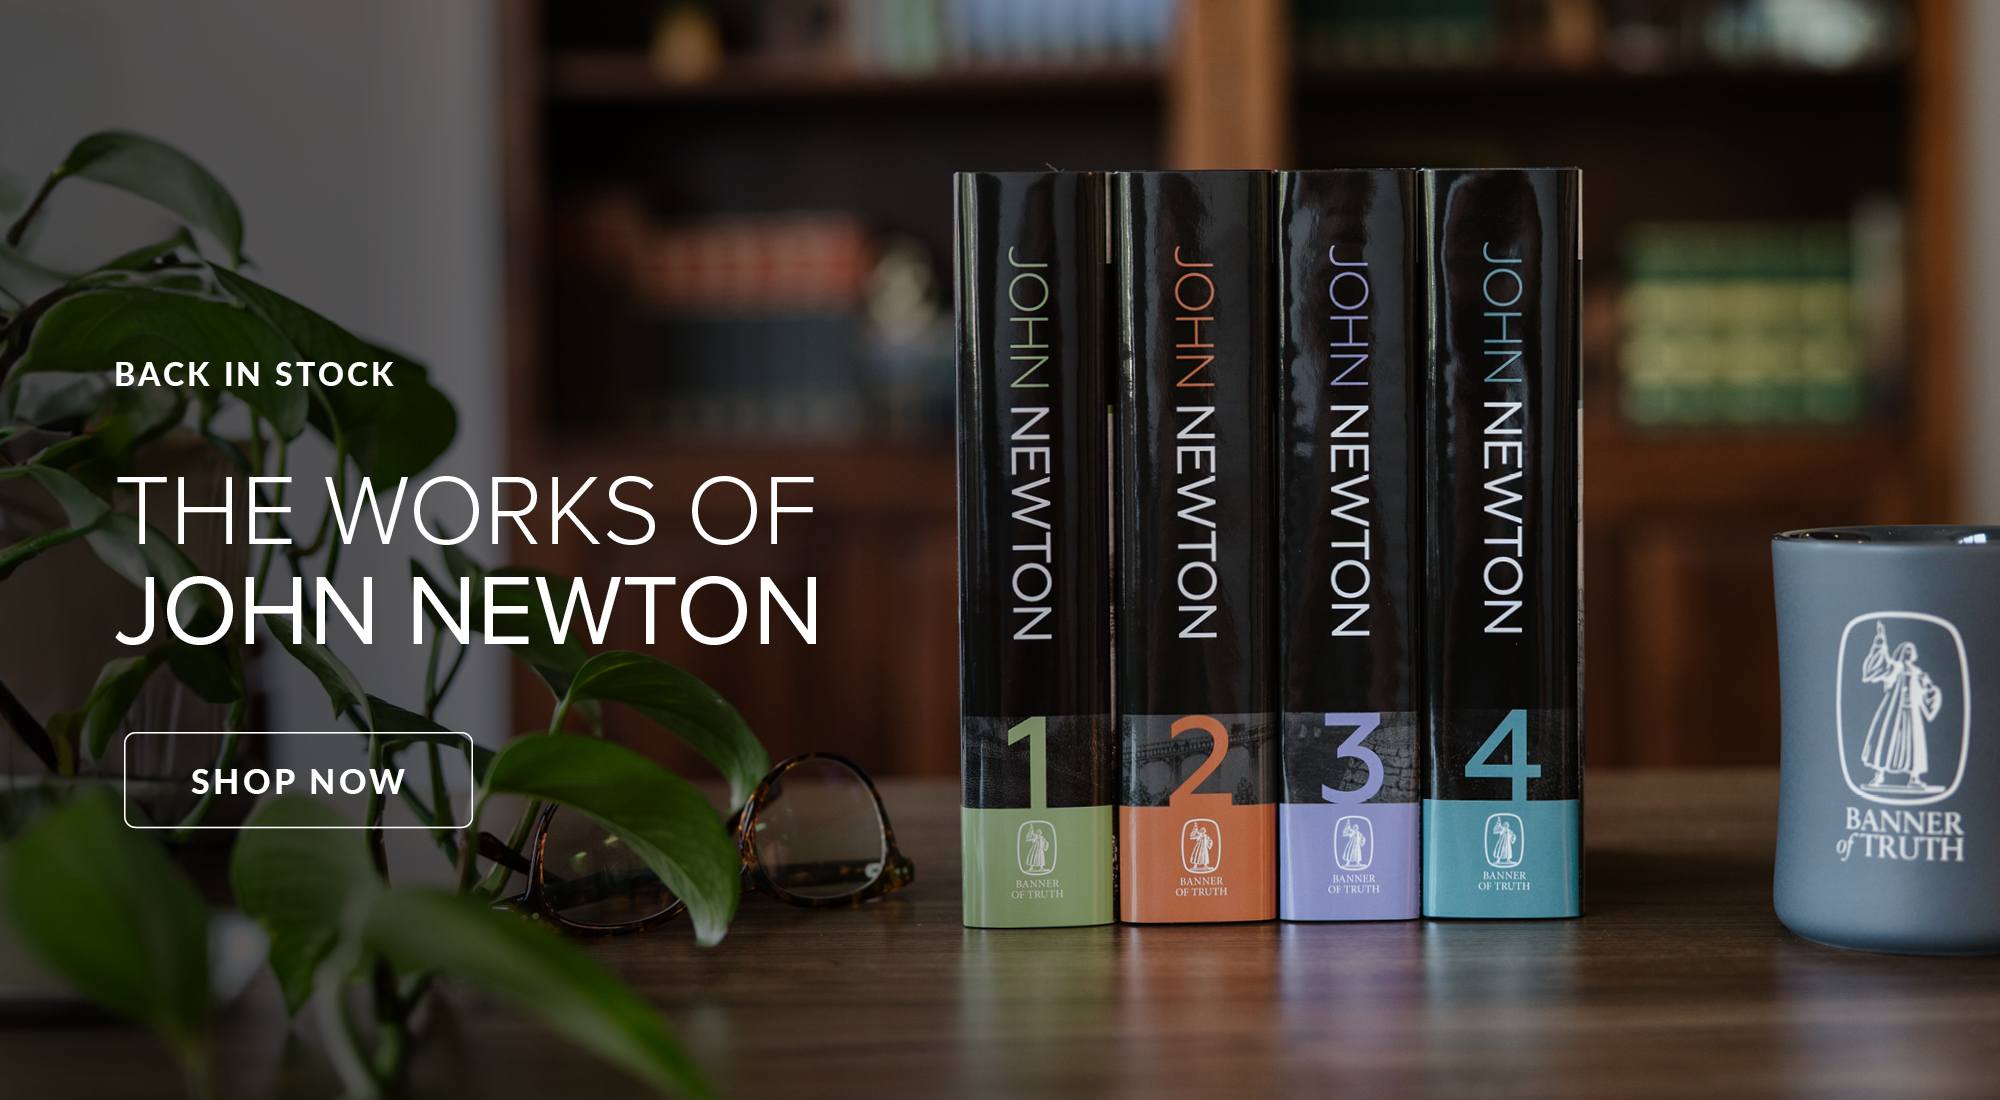 The Works of John Newton